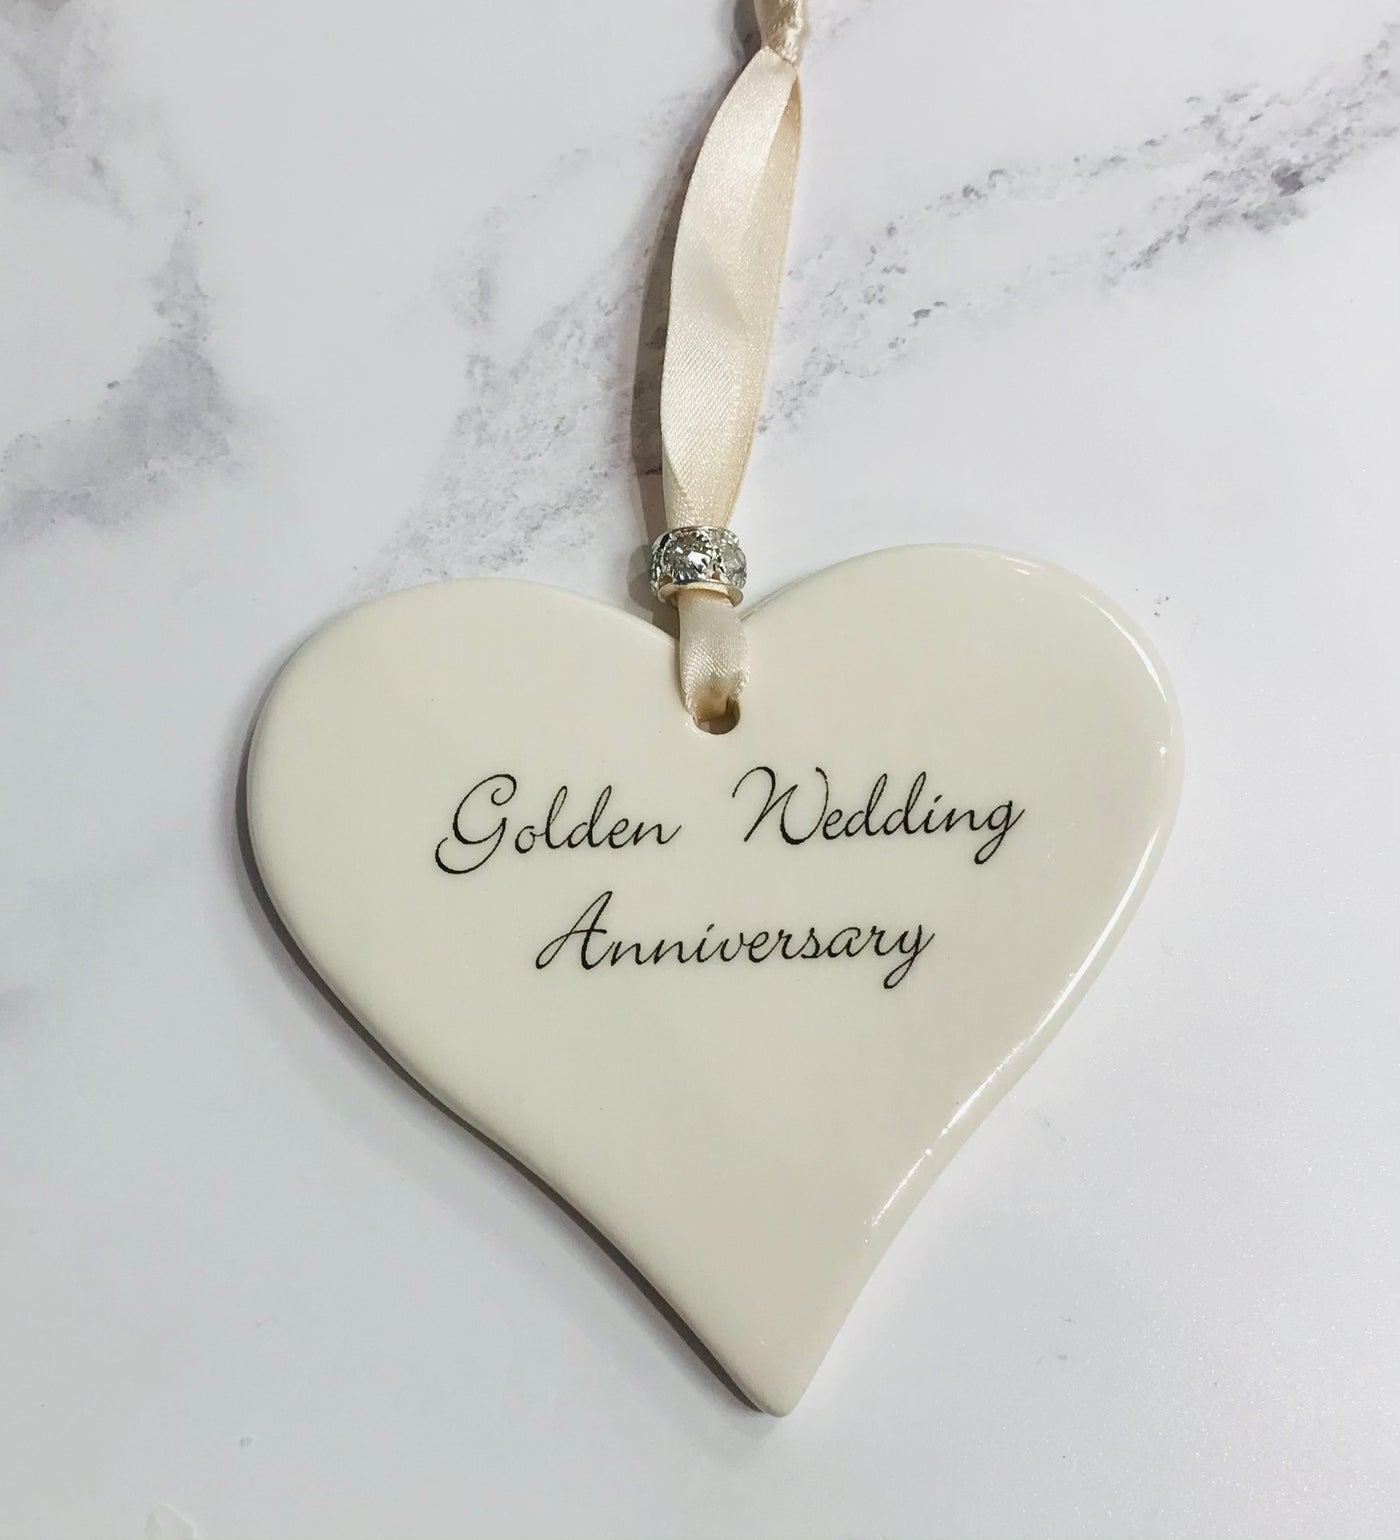 Dimbleby Ceramics LARGE Sentiment Hanging Heart - Golden Wedding Anniversary